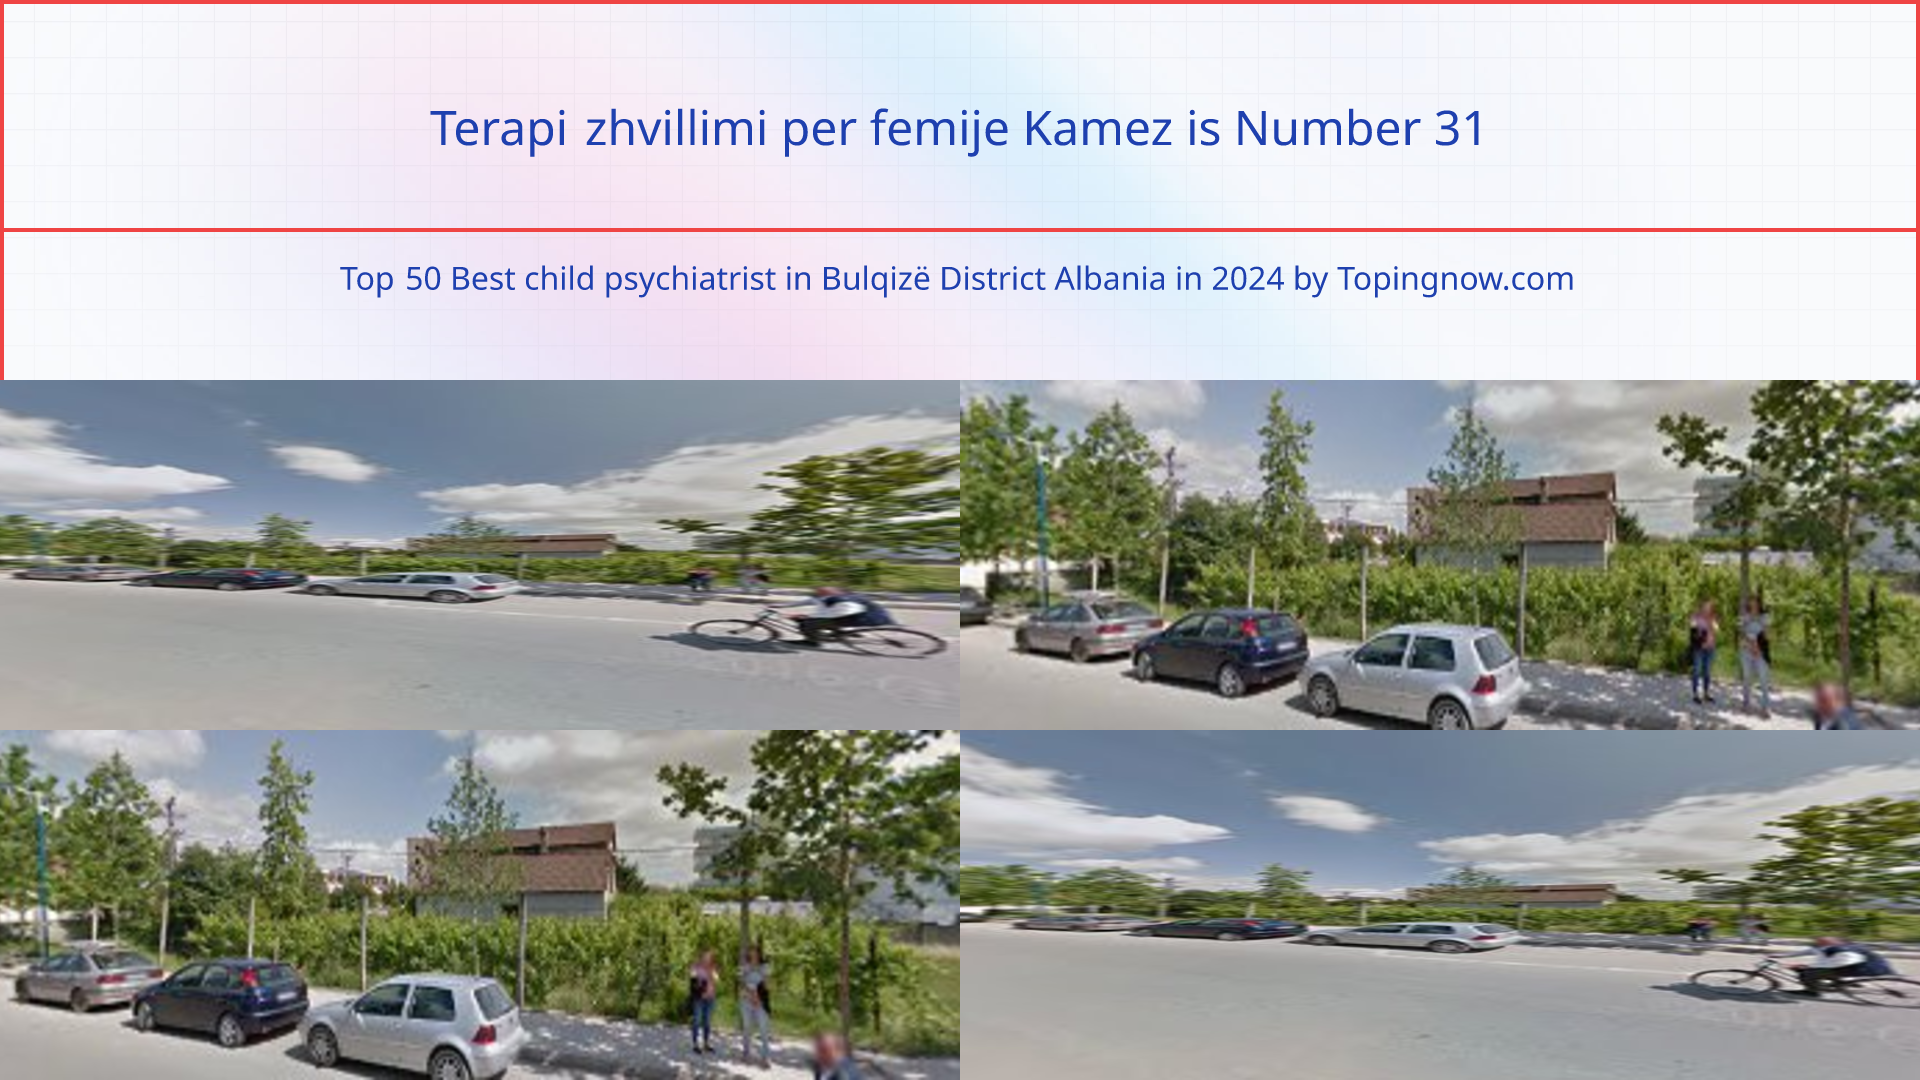 Terapi zhvillimi per femije Kamez: Top 50 Best child psychiatrist in Bulqizë District Albania in 2024